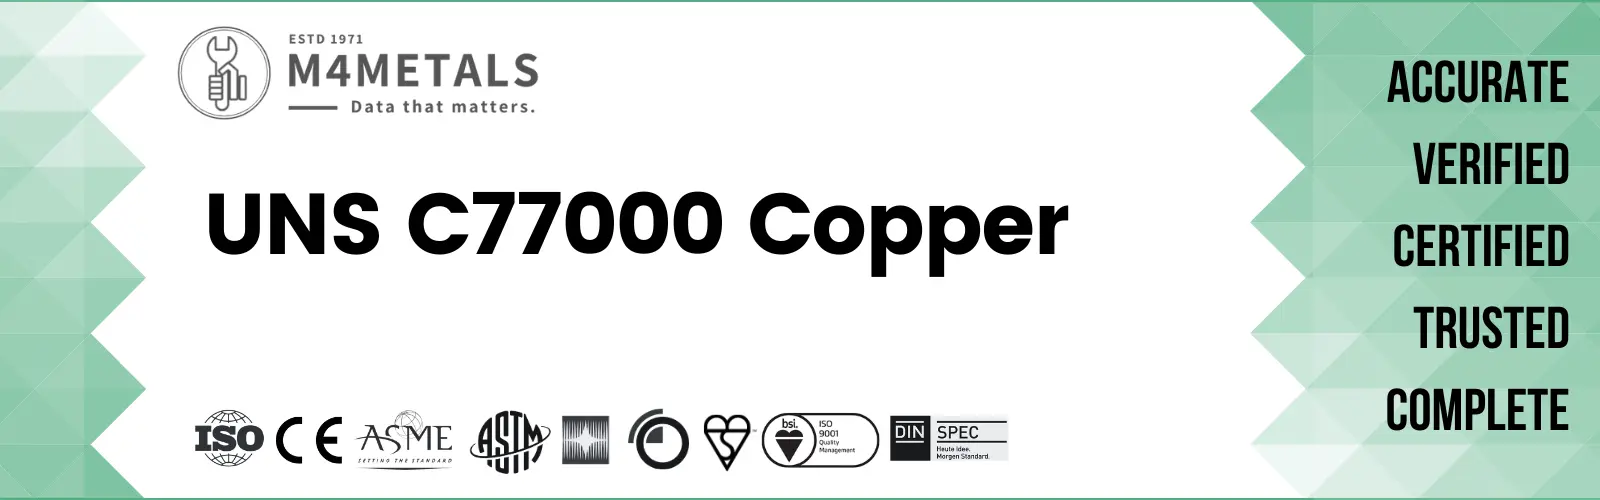 UNS C77000 Copper